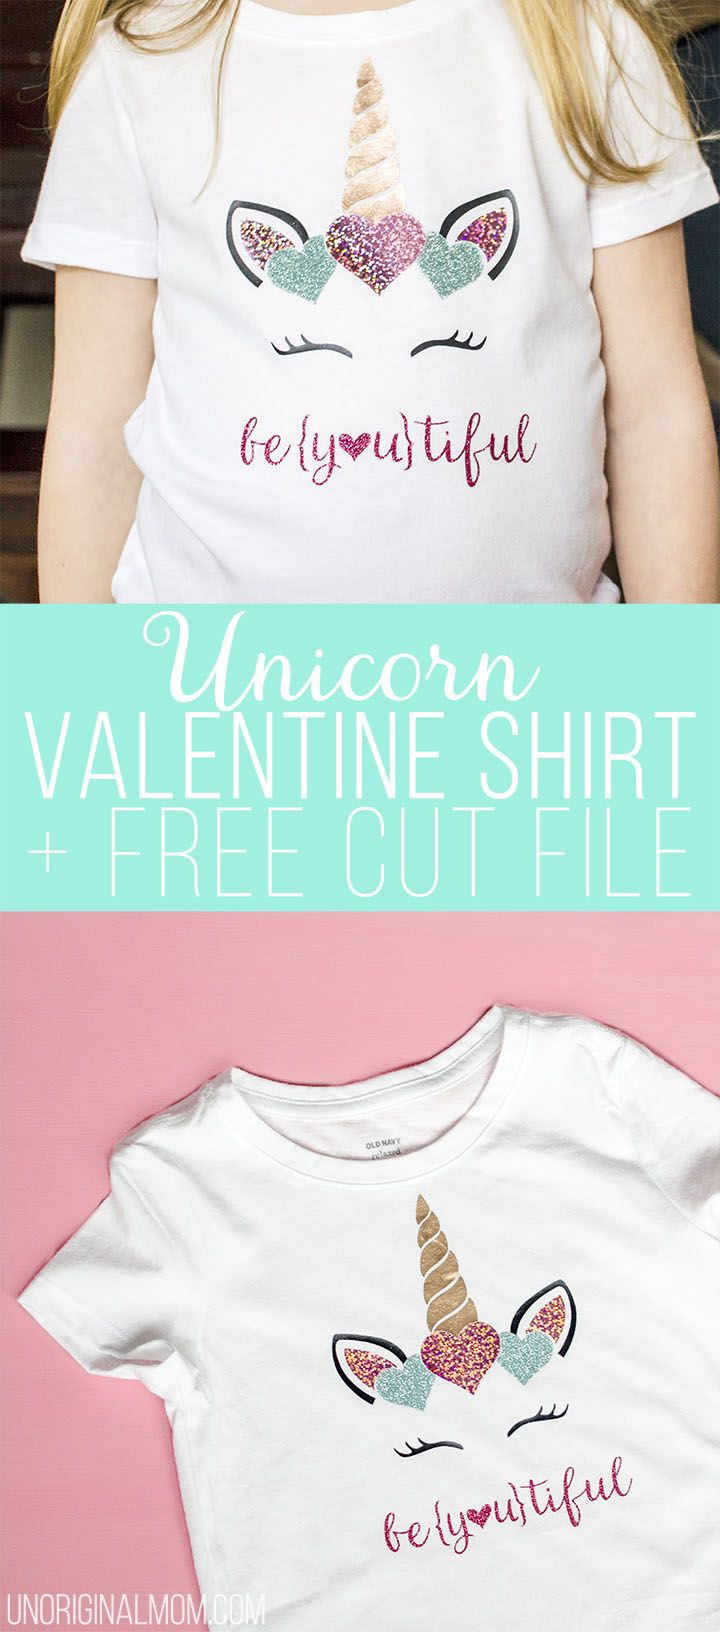 Girl's Unicorn Valentine's Shirt with SHIMMER heat transfer vinyl! This stuff is amazing! Such a cute design for a Valentine's Day Shirt. #htv #valentinesday #silhouette #cricut #glitterhtv #shimmerhtv #valentinesshirt #beyoutiful